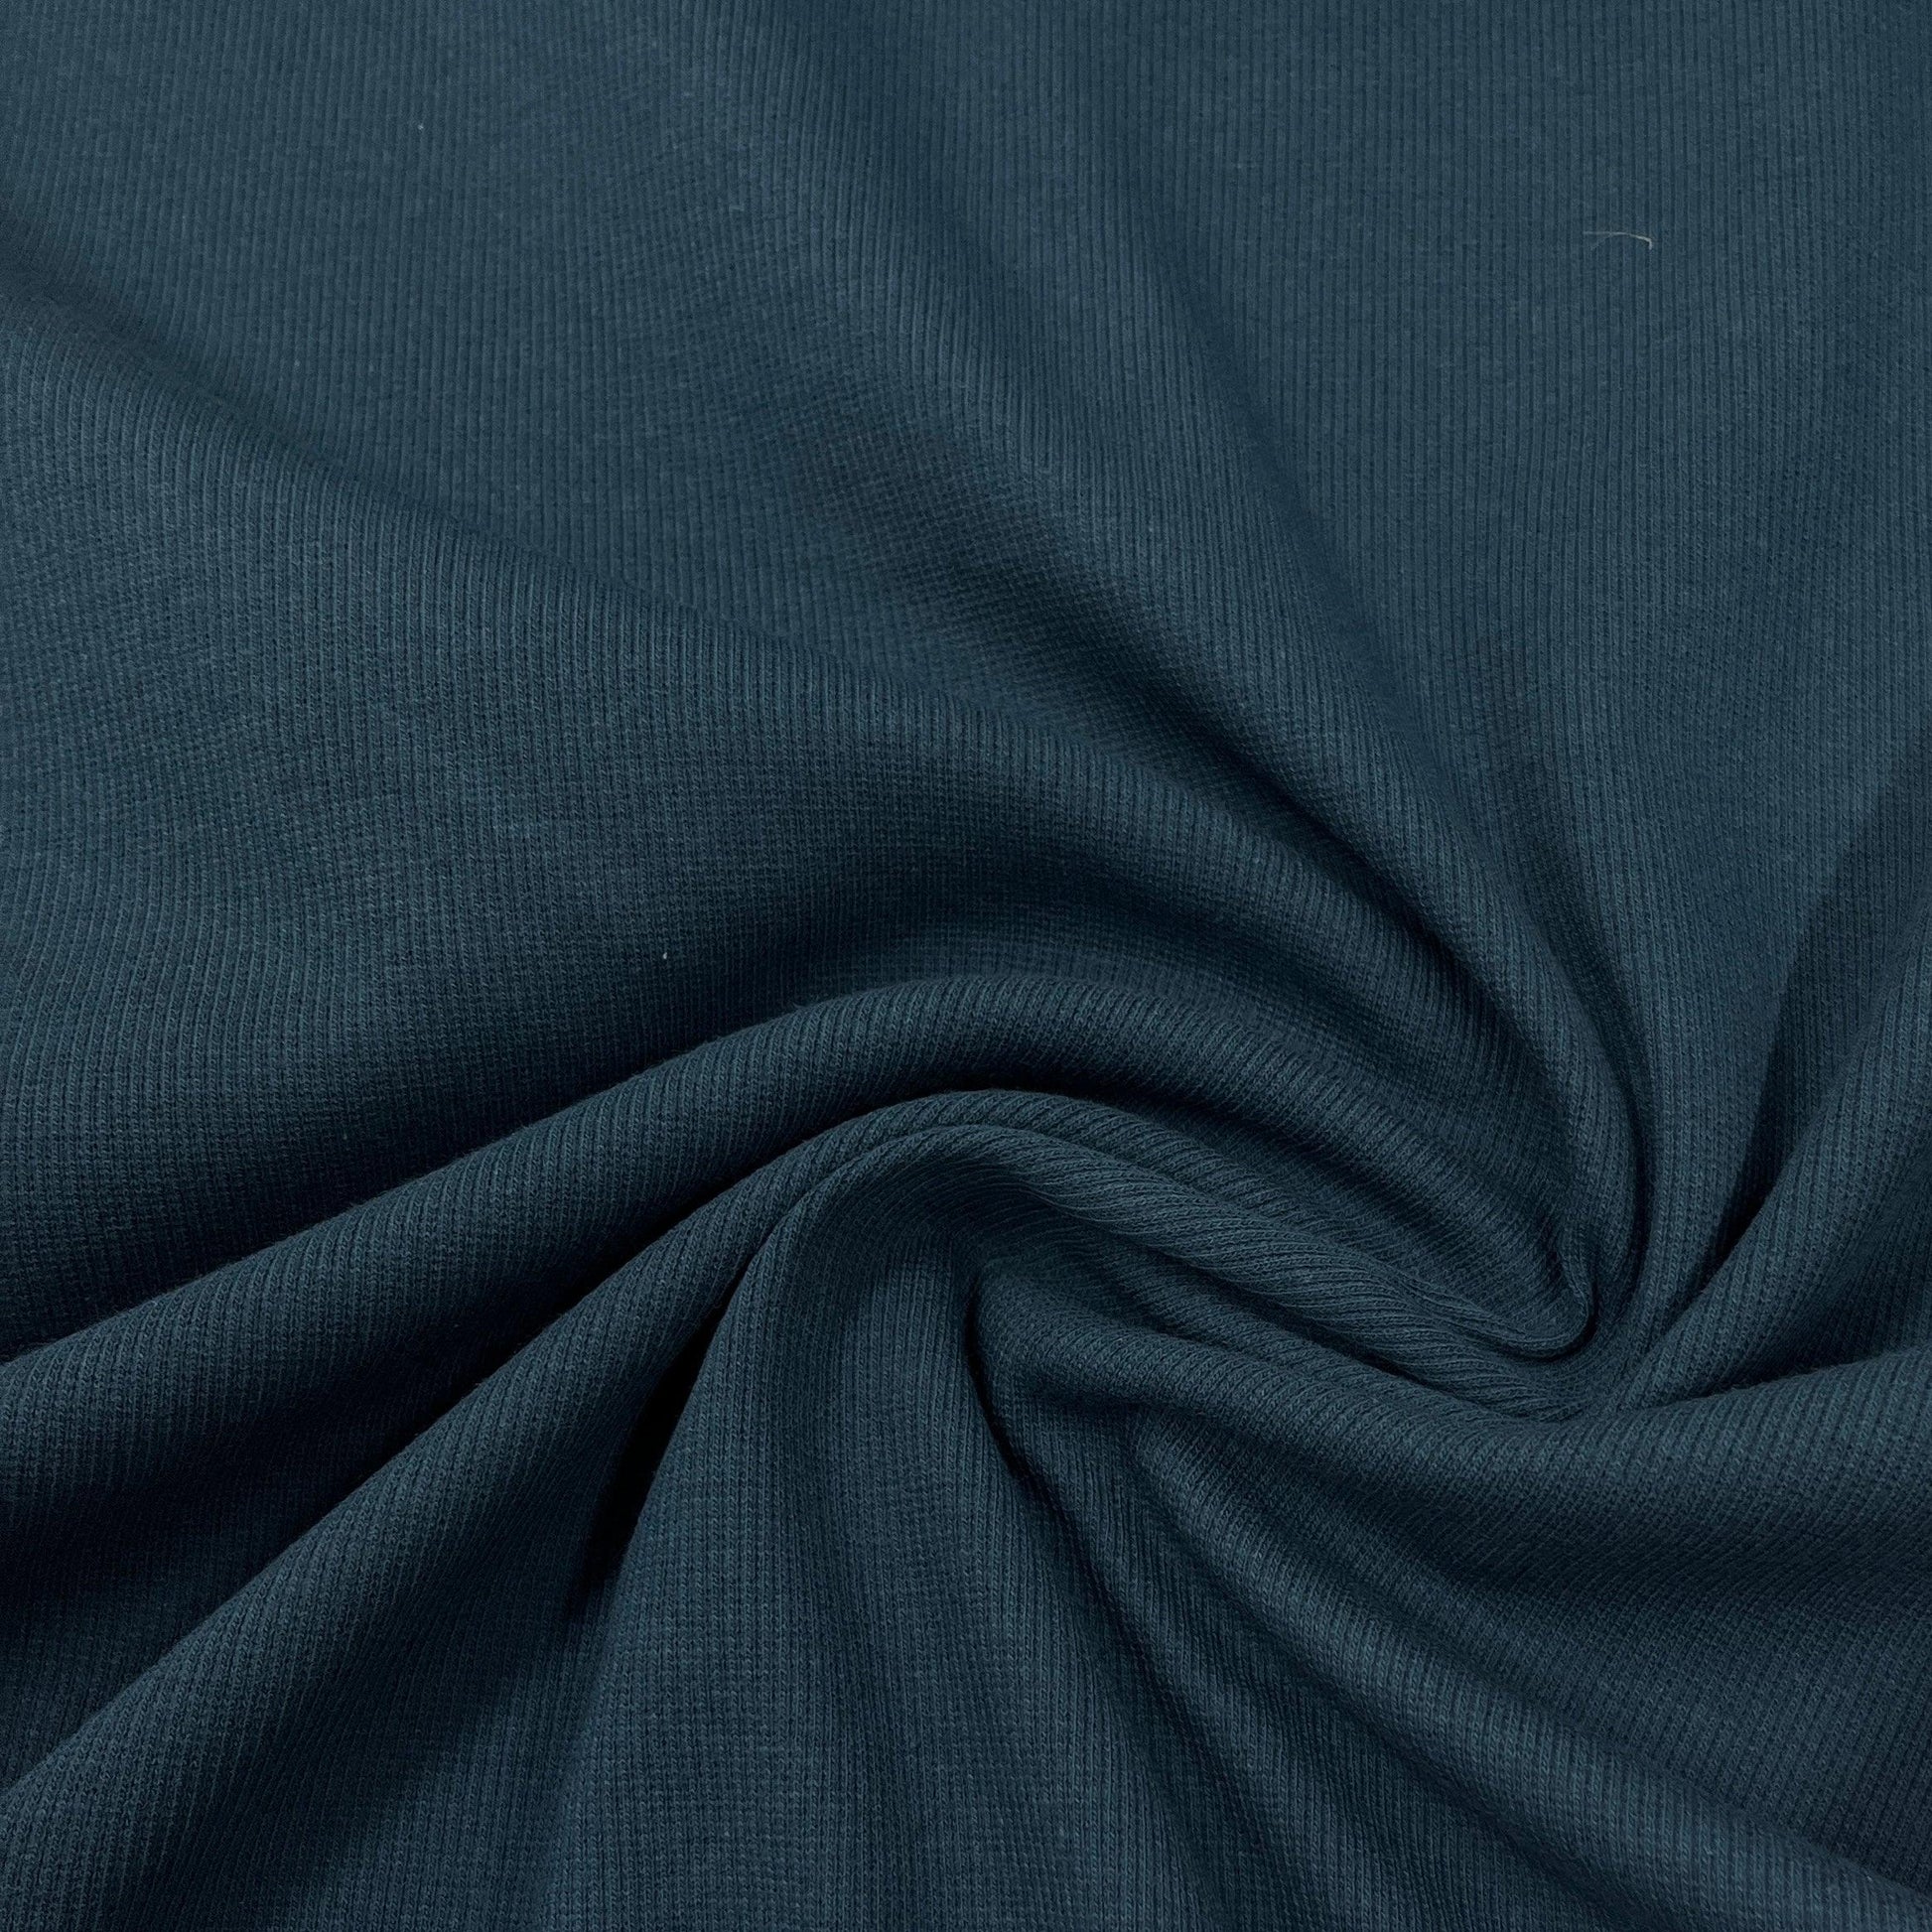 Ultramarine 2x2 Organic Cotton Rib Knit Fabric - Nature's Fabrics